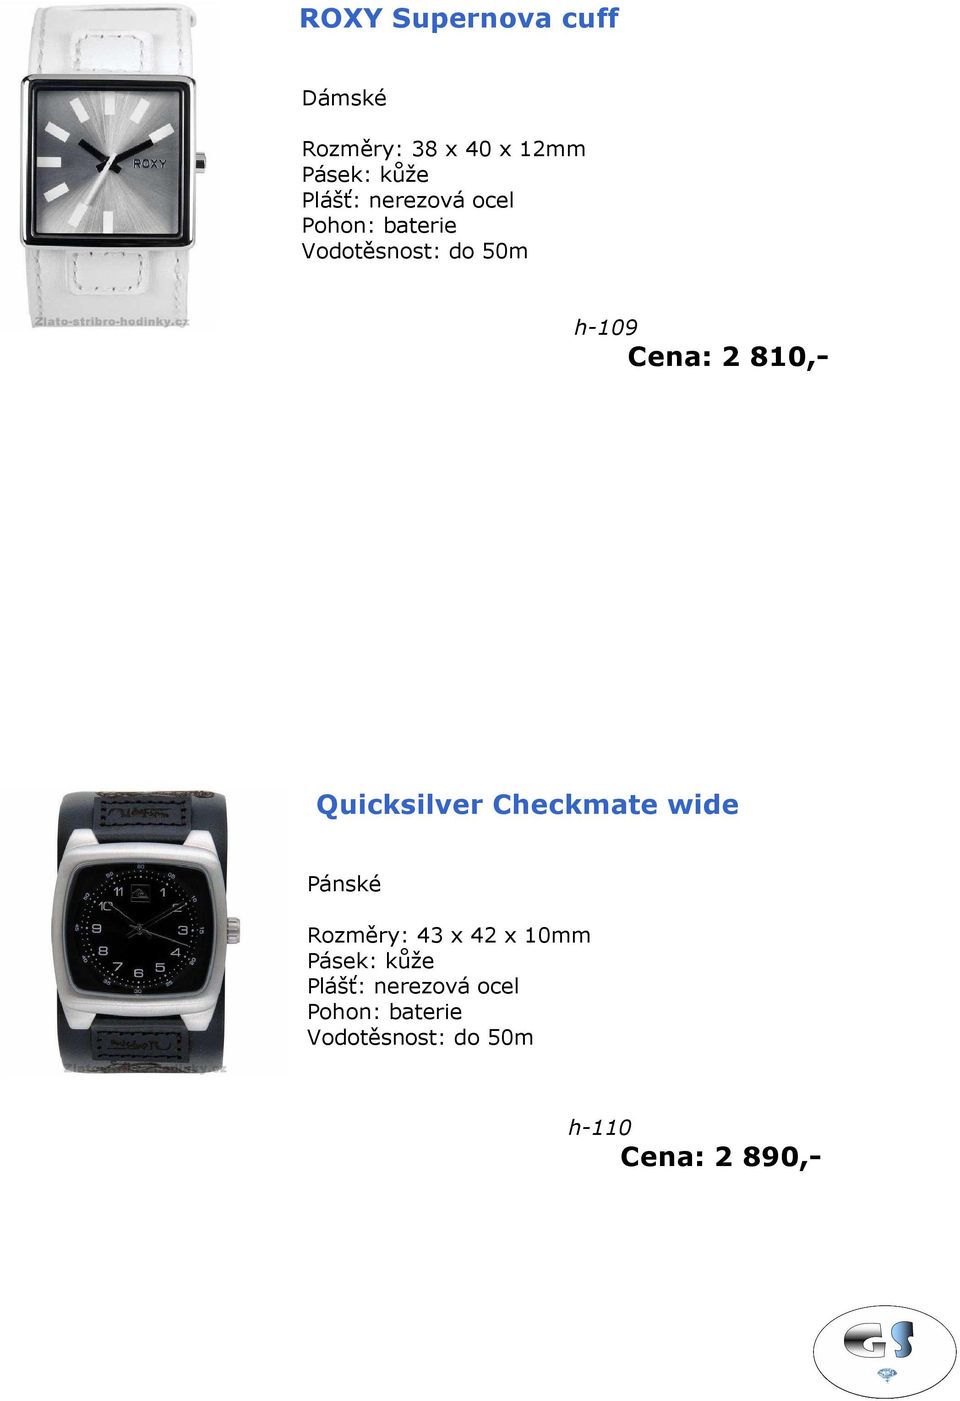 Quicksilver Checkmate wide Pánské Rozměry: 43 x 42 x 10mm Pásek: kůže